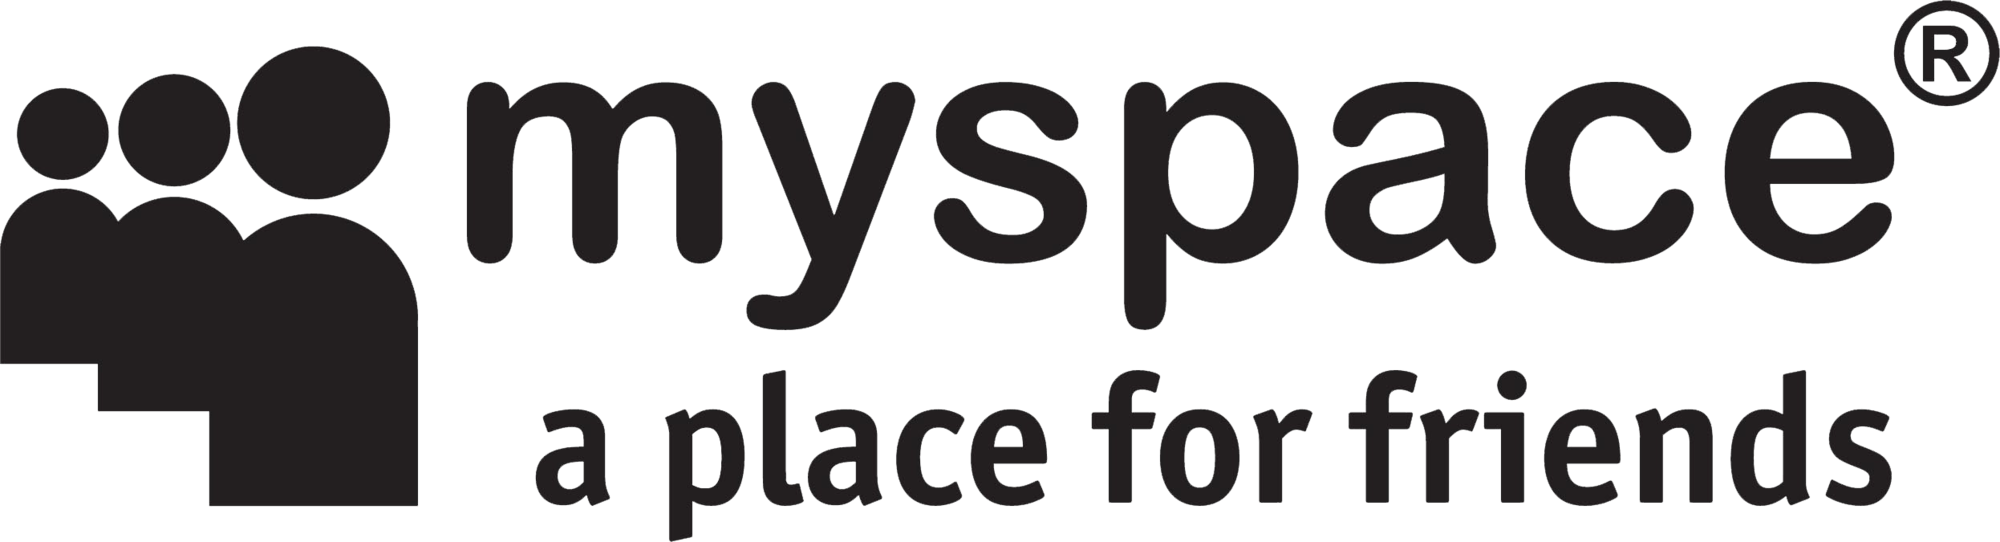 Myspace Logo - Image - Myspace logo.png | Kesharose Wiki | FANDOM powered by Wikia